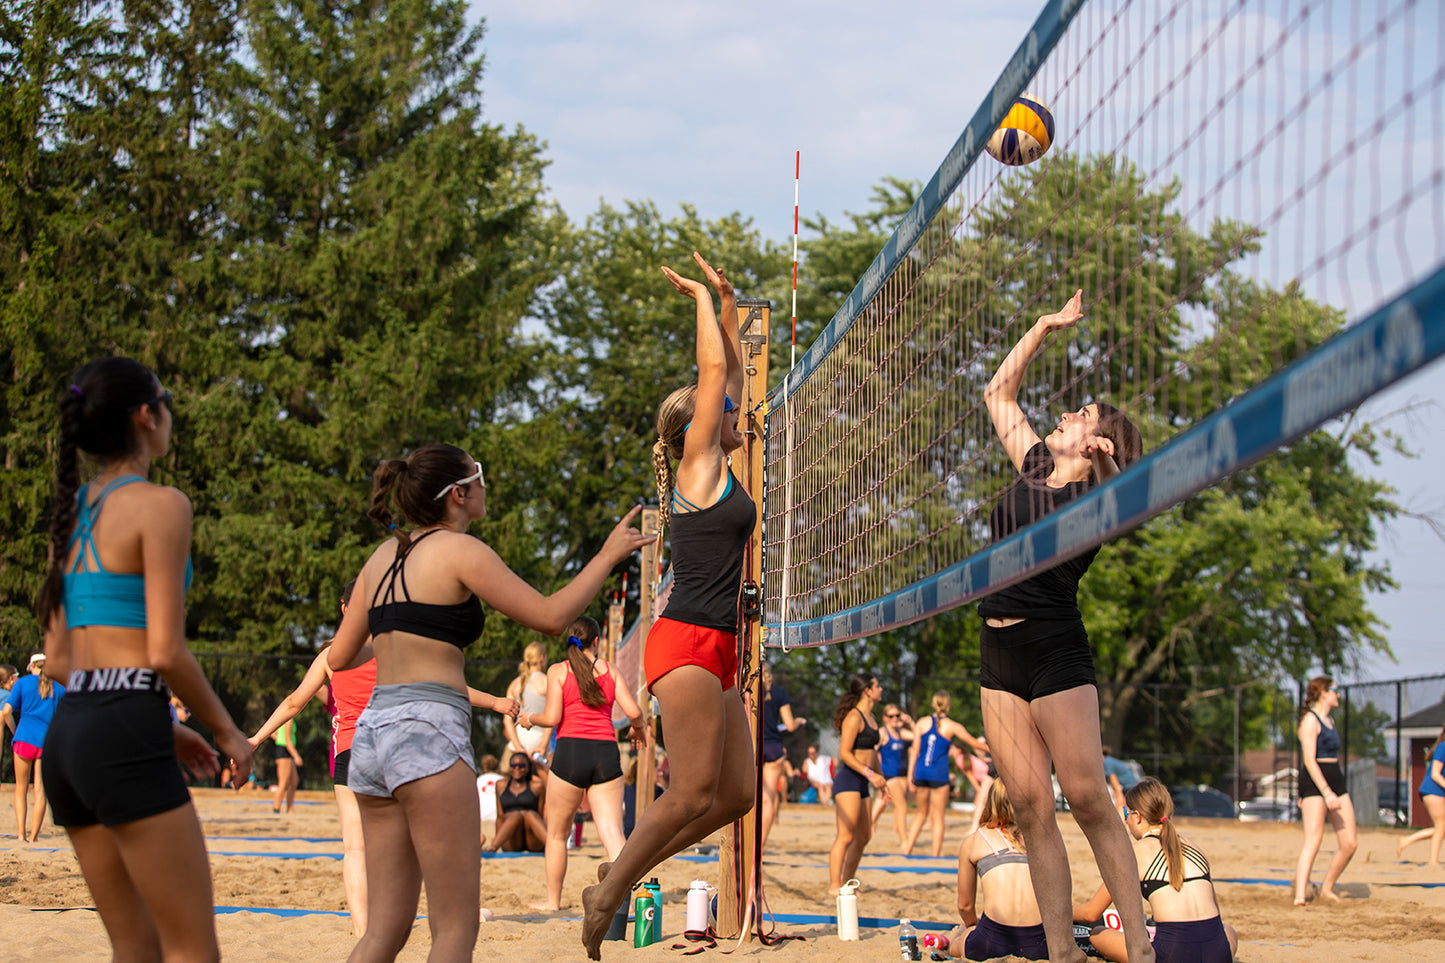 Smash 4v4 Beach Volleyball Tournament - Sat Aug 26th 9am-3pm